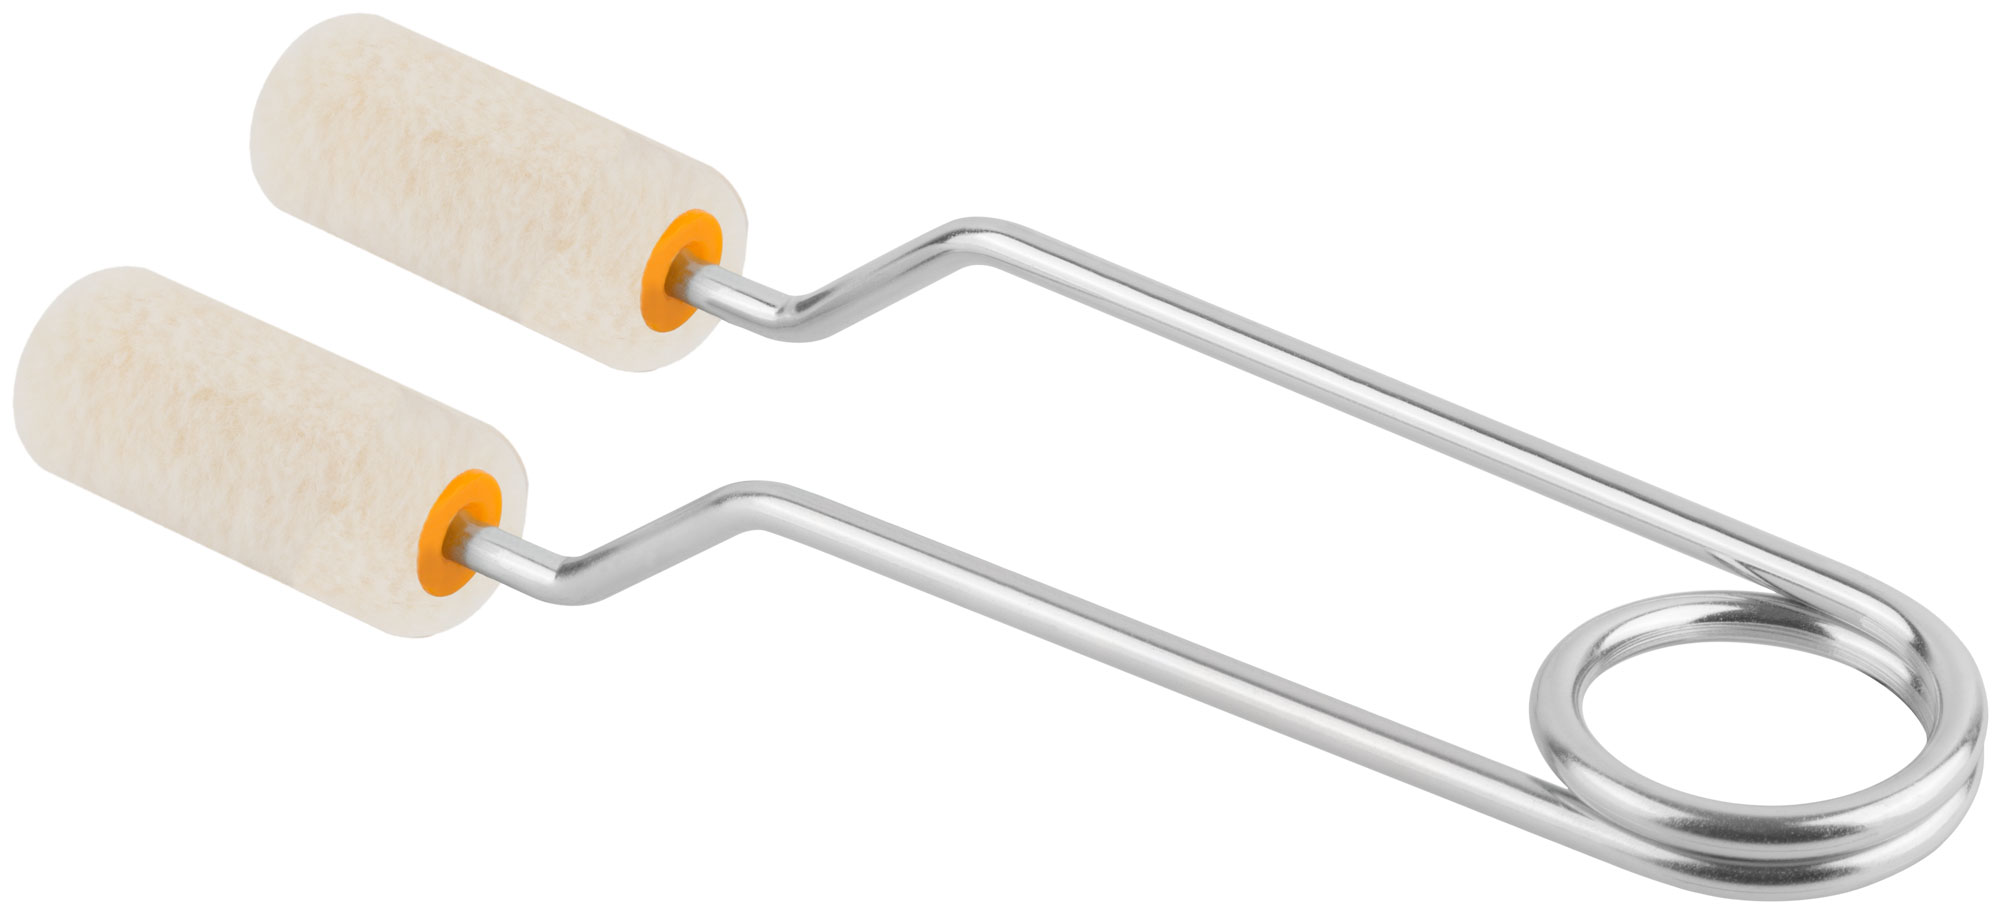 Ролик специальный для решеток, арматур, оград, ядро 15 мм,  100% велюр, ворс 5 мм, ручка д ролик специальный для решеток арматур оград ядро 15 мм 100% велюр ворс 5 мм ручка